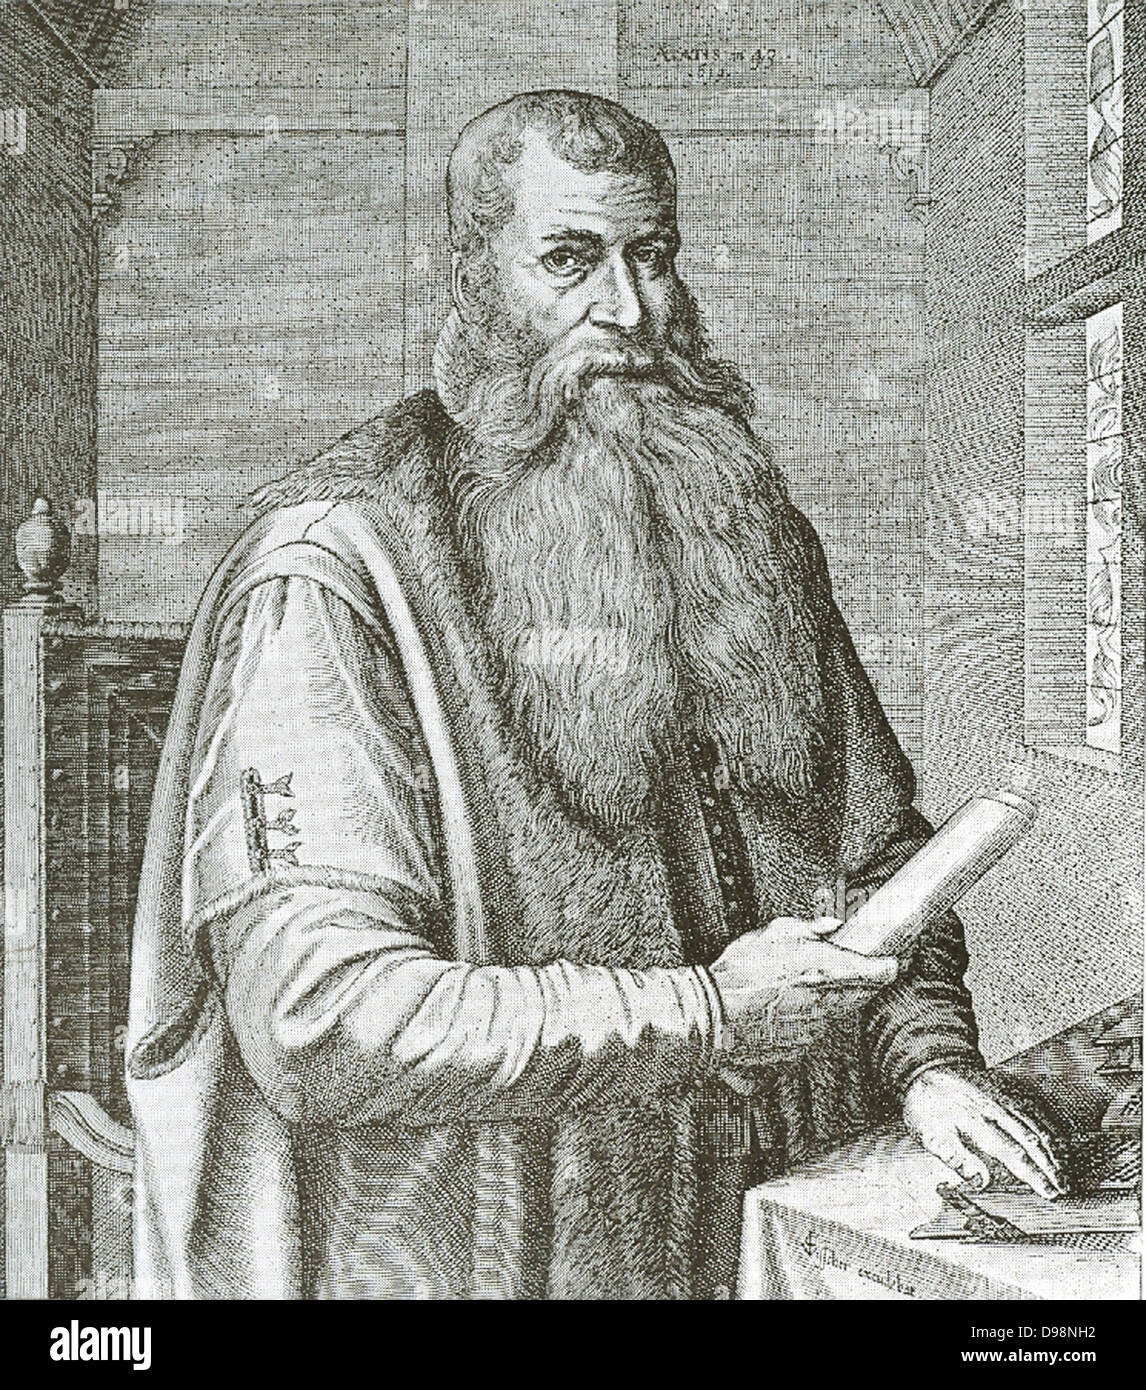 Johann(es) Bogerman (1576 - 11 settembre 1637) era un protestante Frisone divino. Egli era nato a Uplewert (ora Ostfriesland, Foto Stock